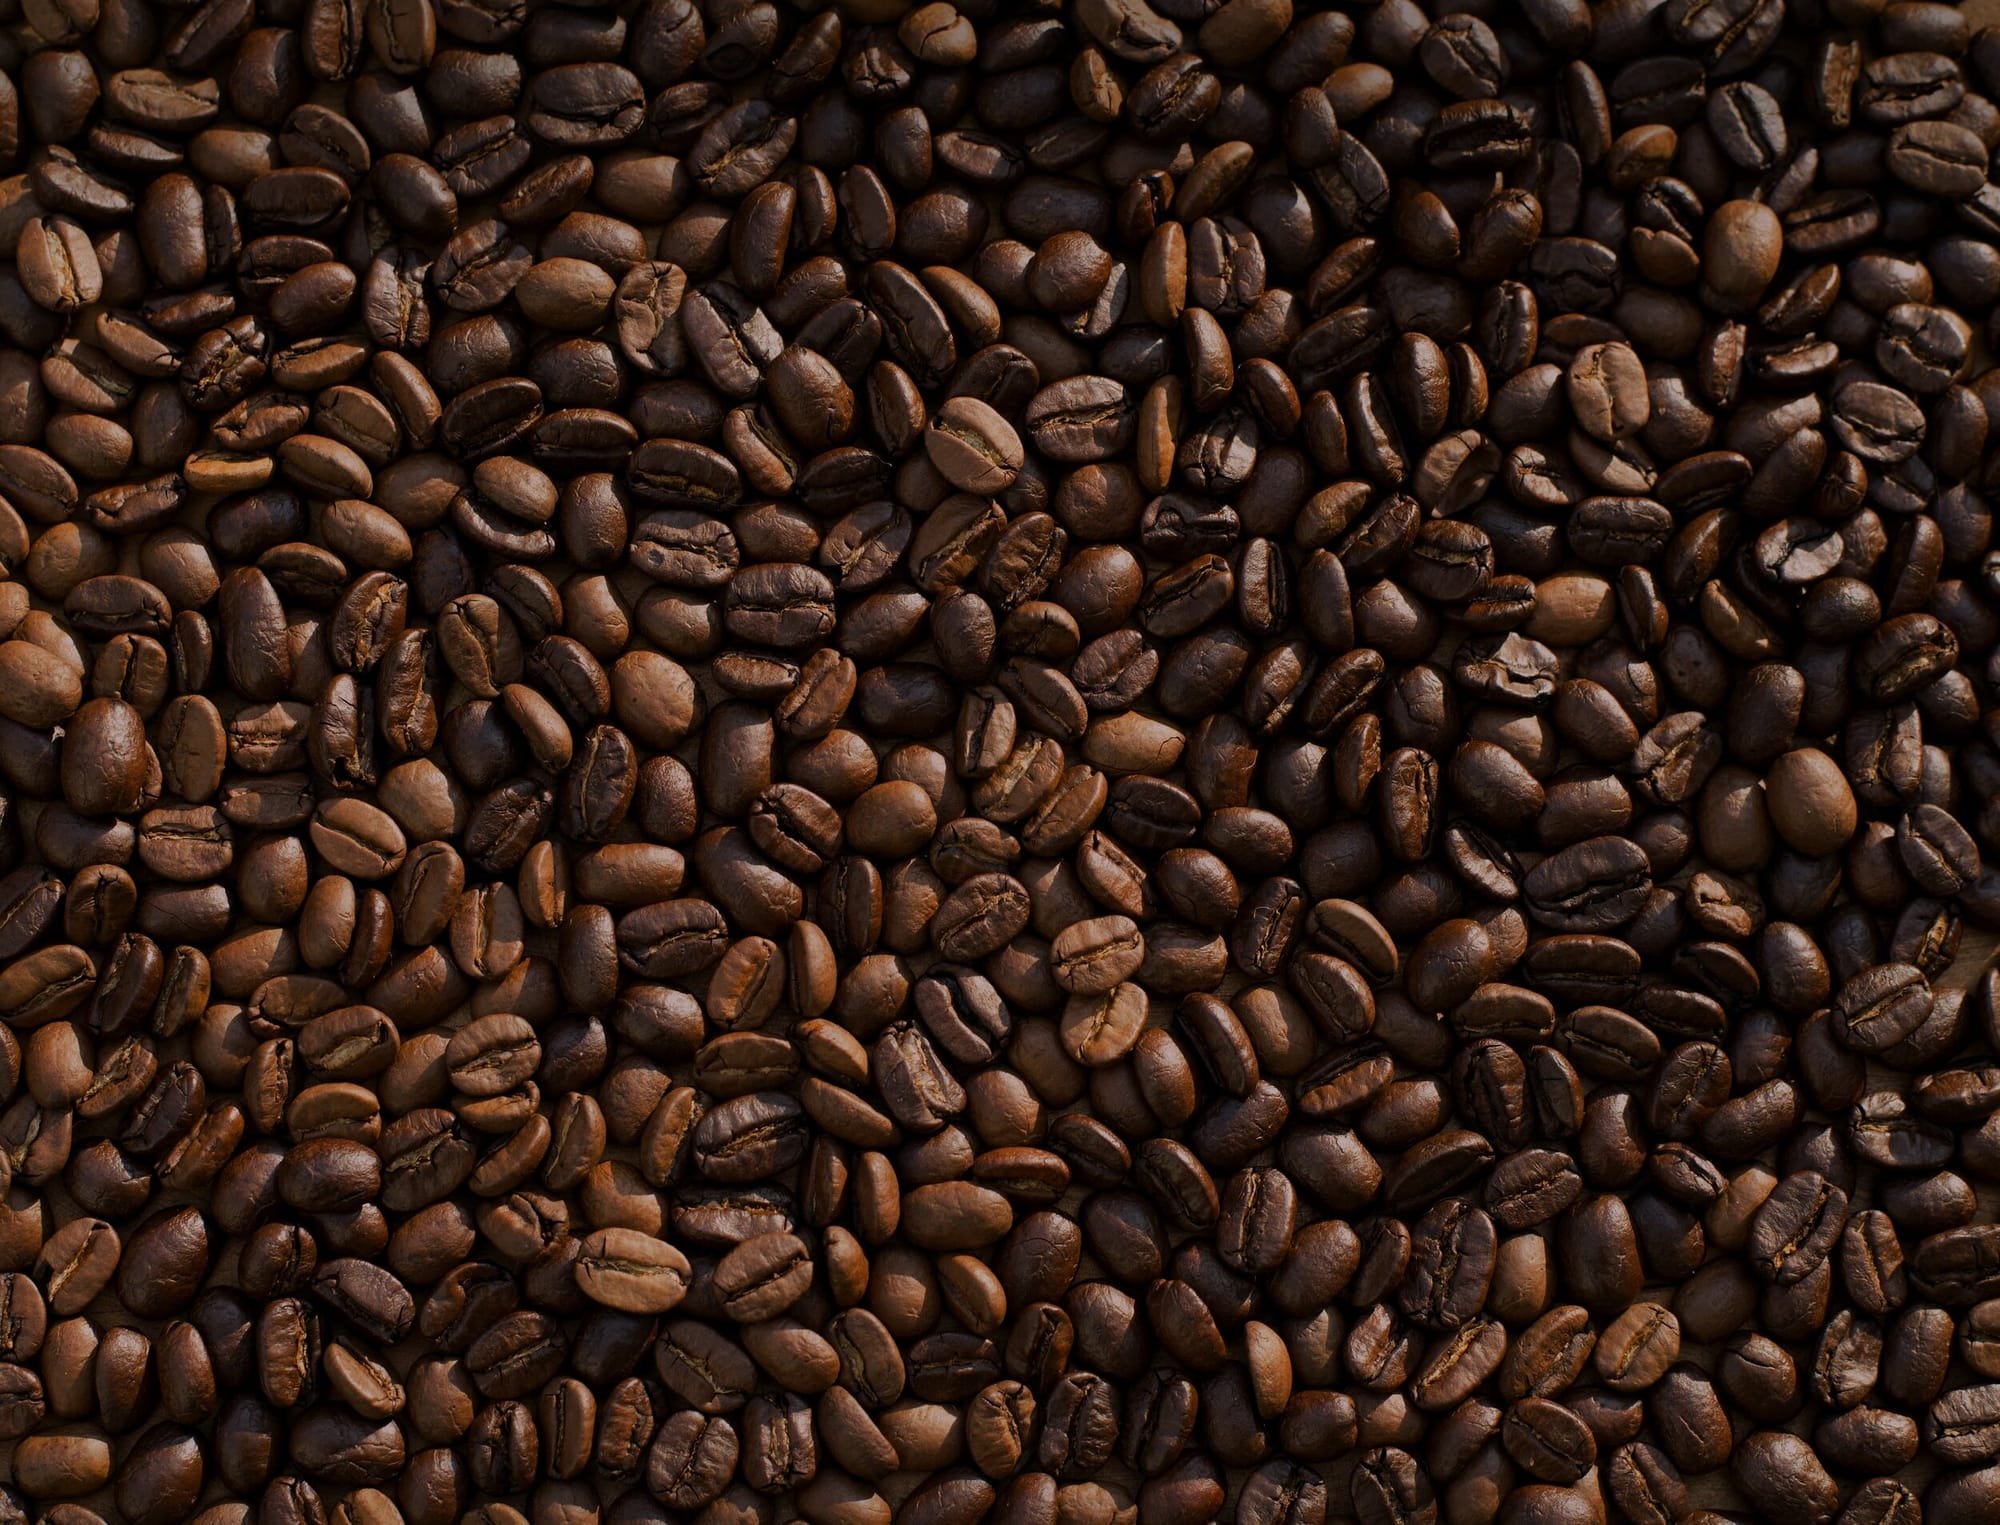 Benefits of Drinking Kona Coffee